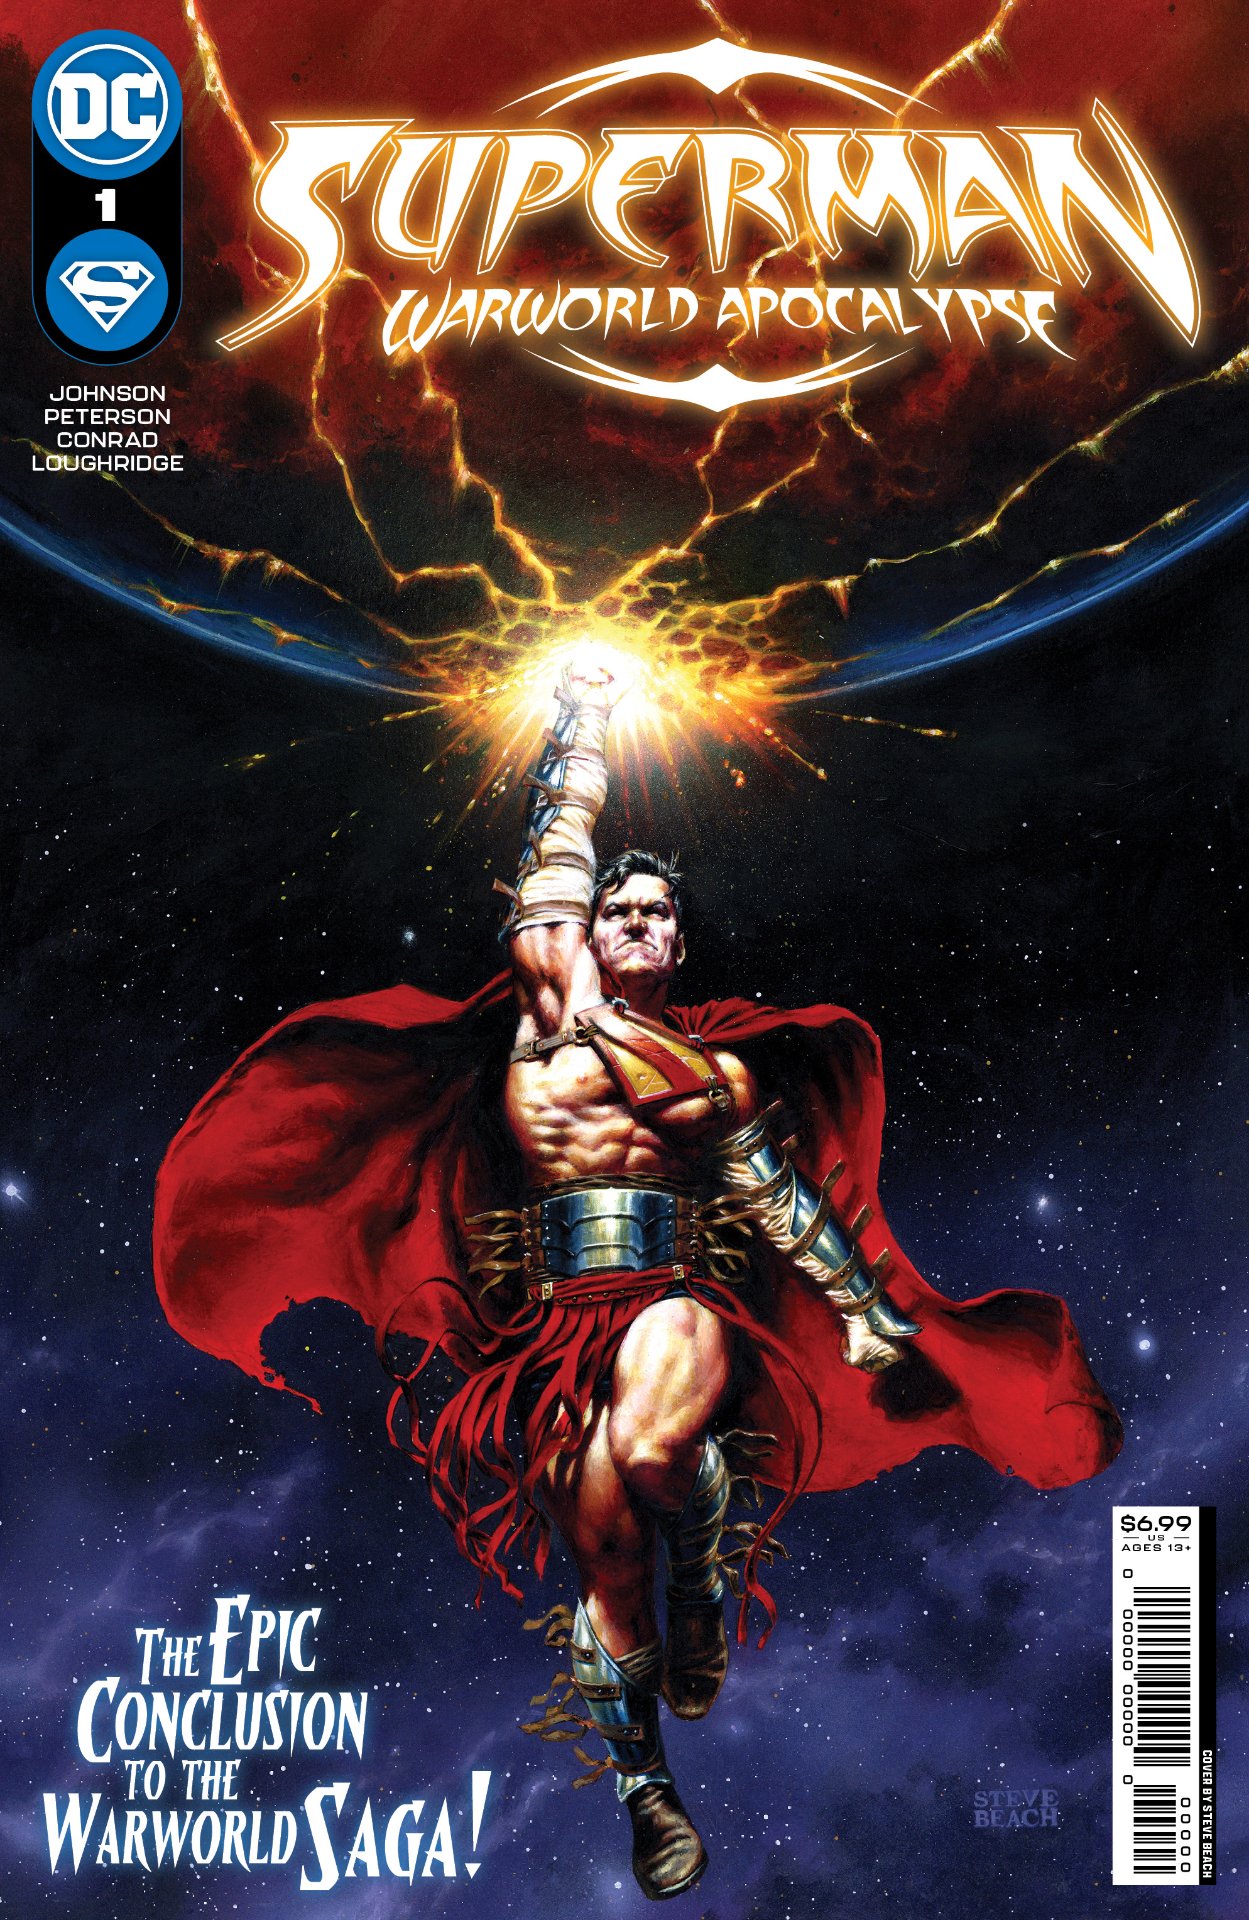 Portada de Superman: Warworld Apocalypse #1 por Steve Beach